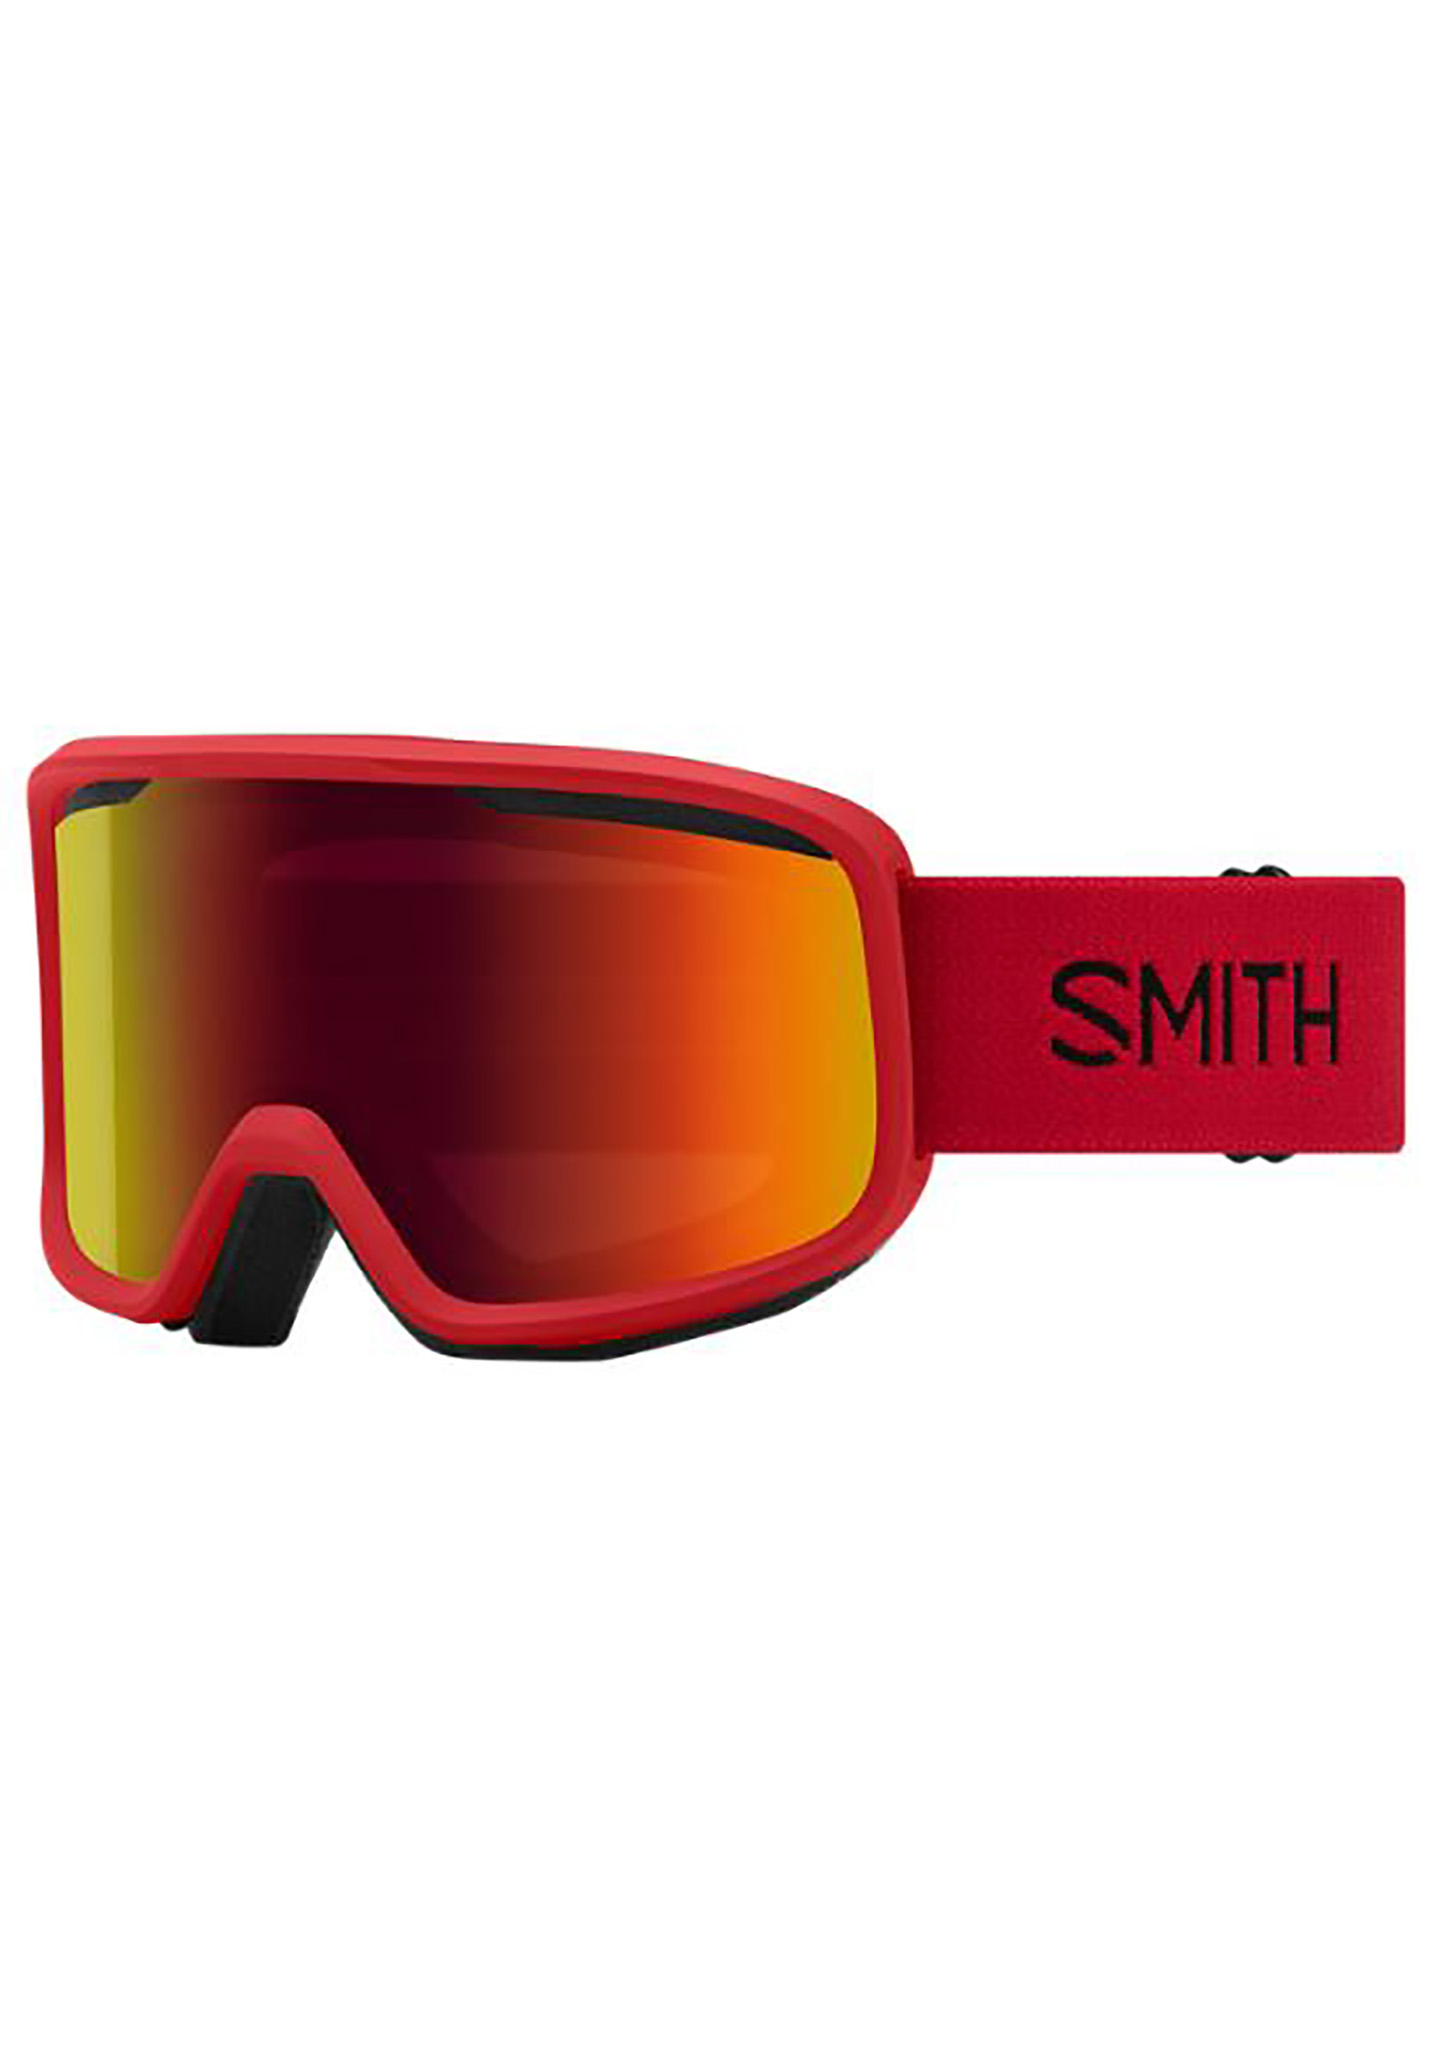 Smith Frontier Snowboardbrillen red One Size